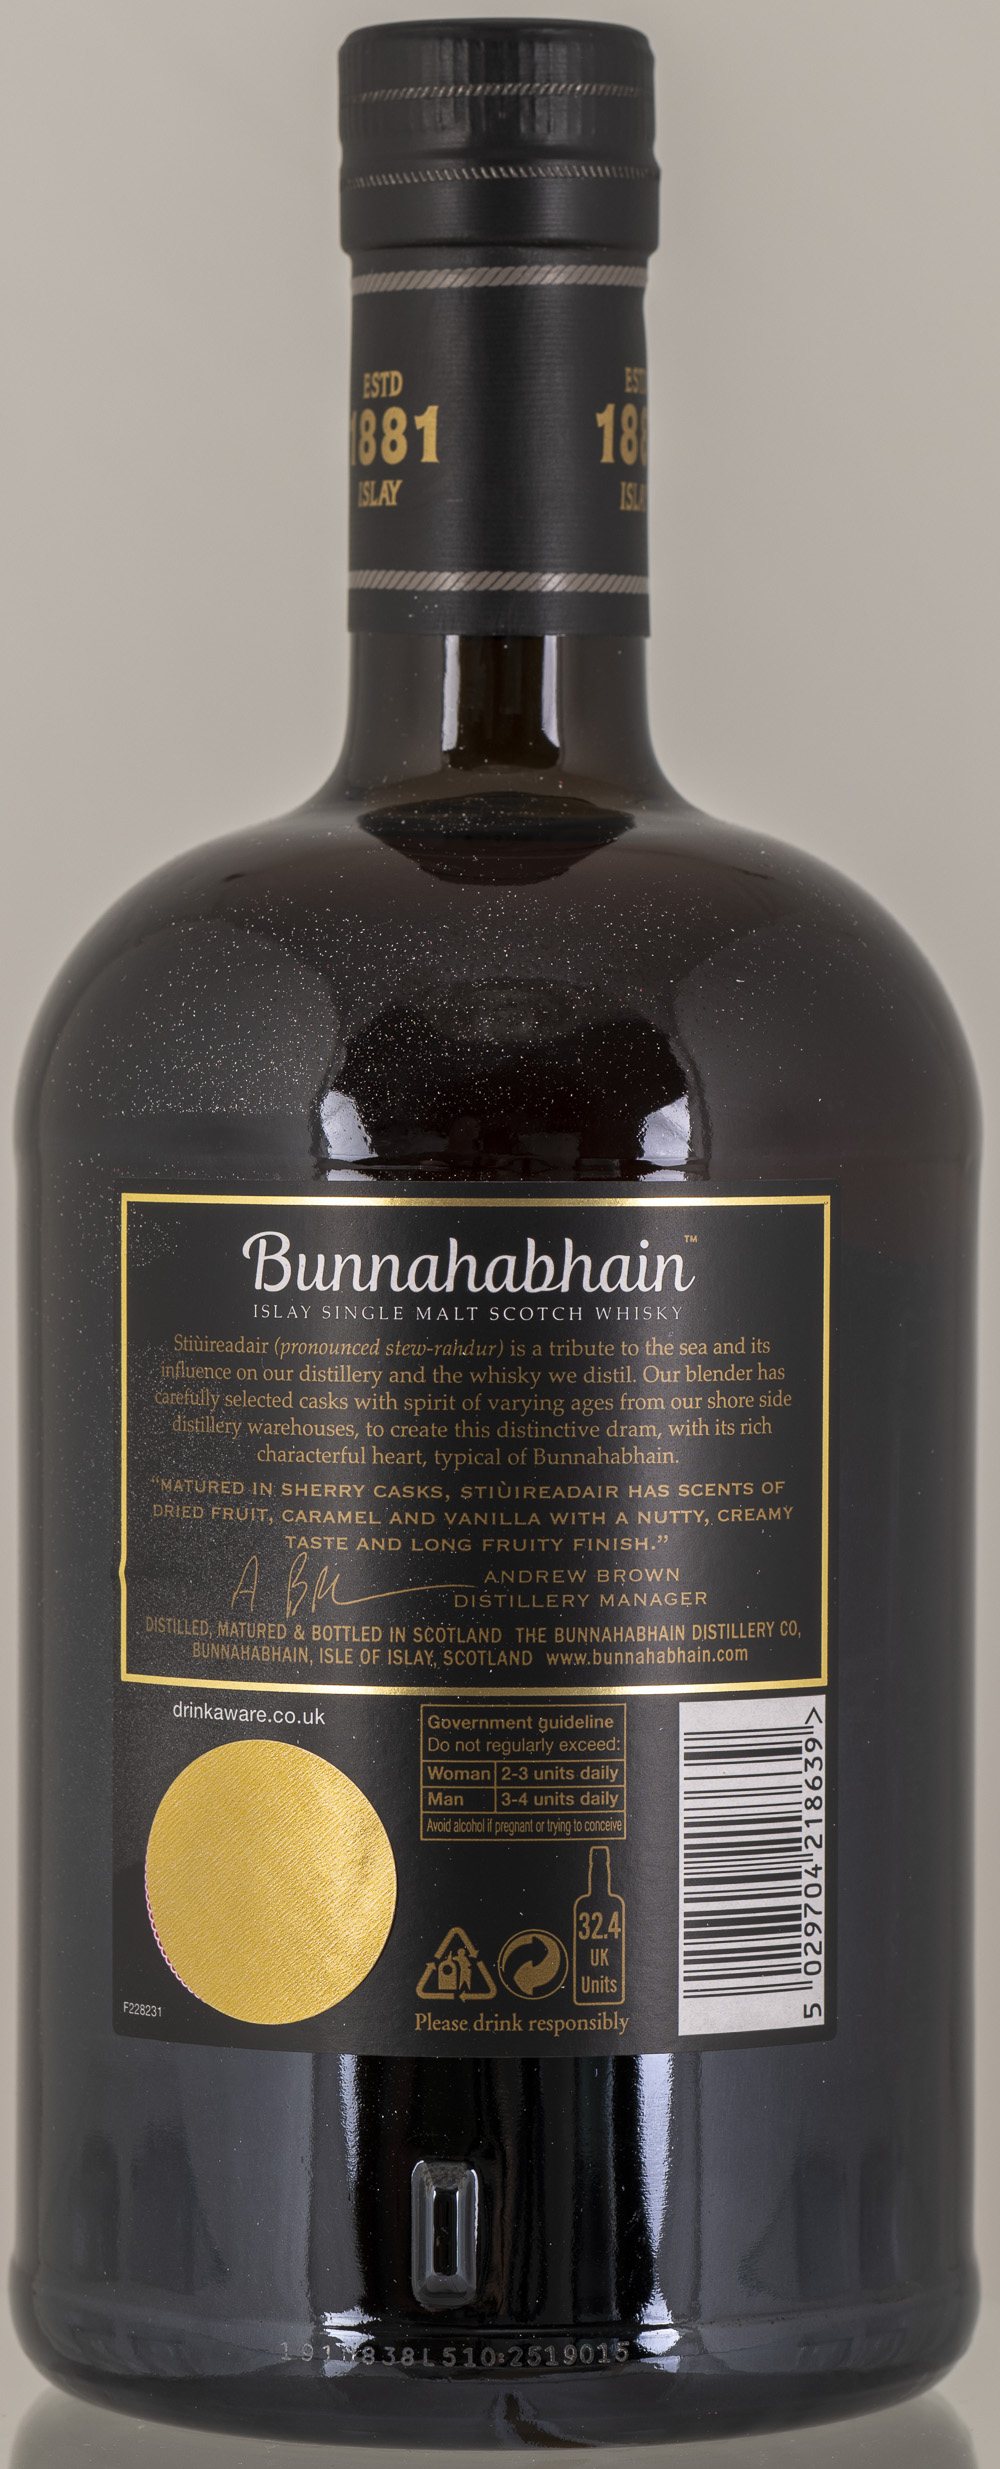 Billede: PHC_2199 - Bunnahabhain Stiuireadair - bottle back.jpg